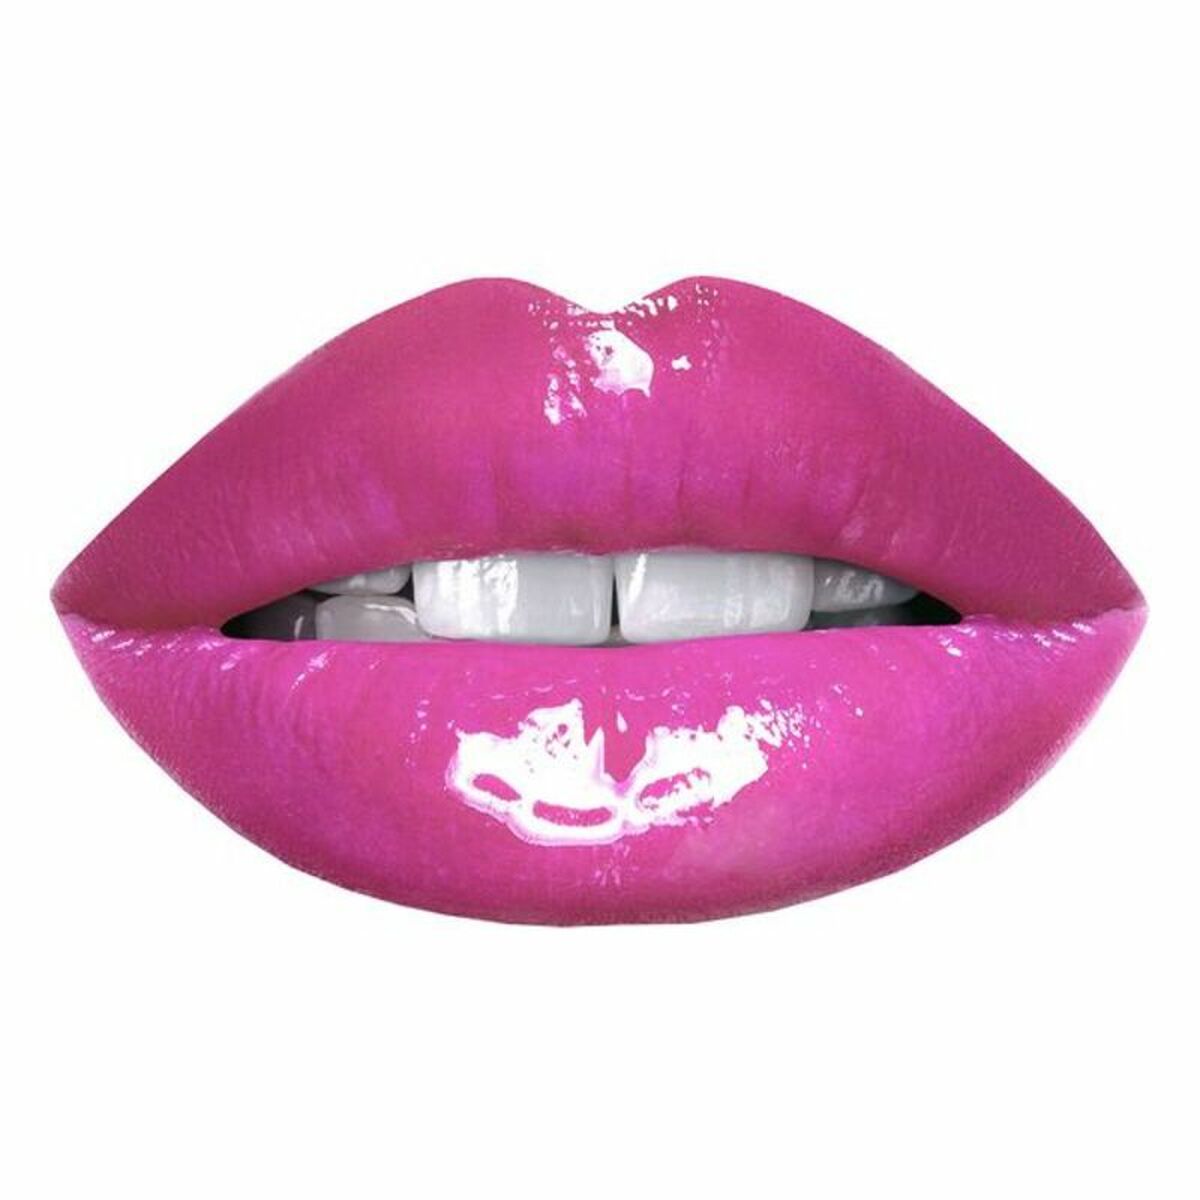 Gloss Lip Shot brutal ehrlich eleganter Lippenschuss (7,5 ml)